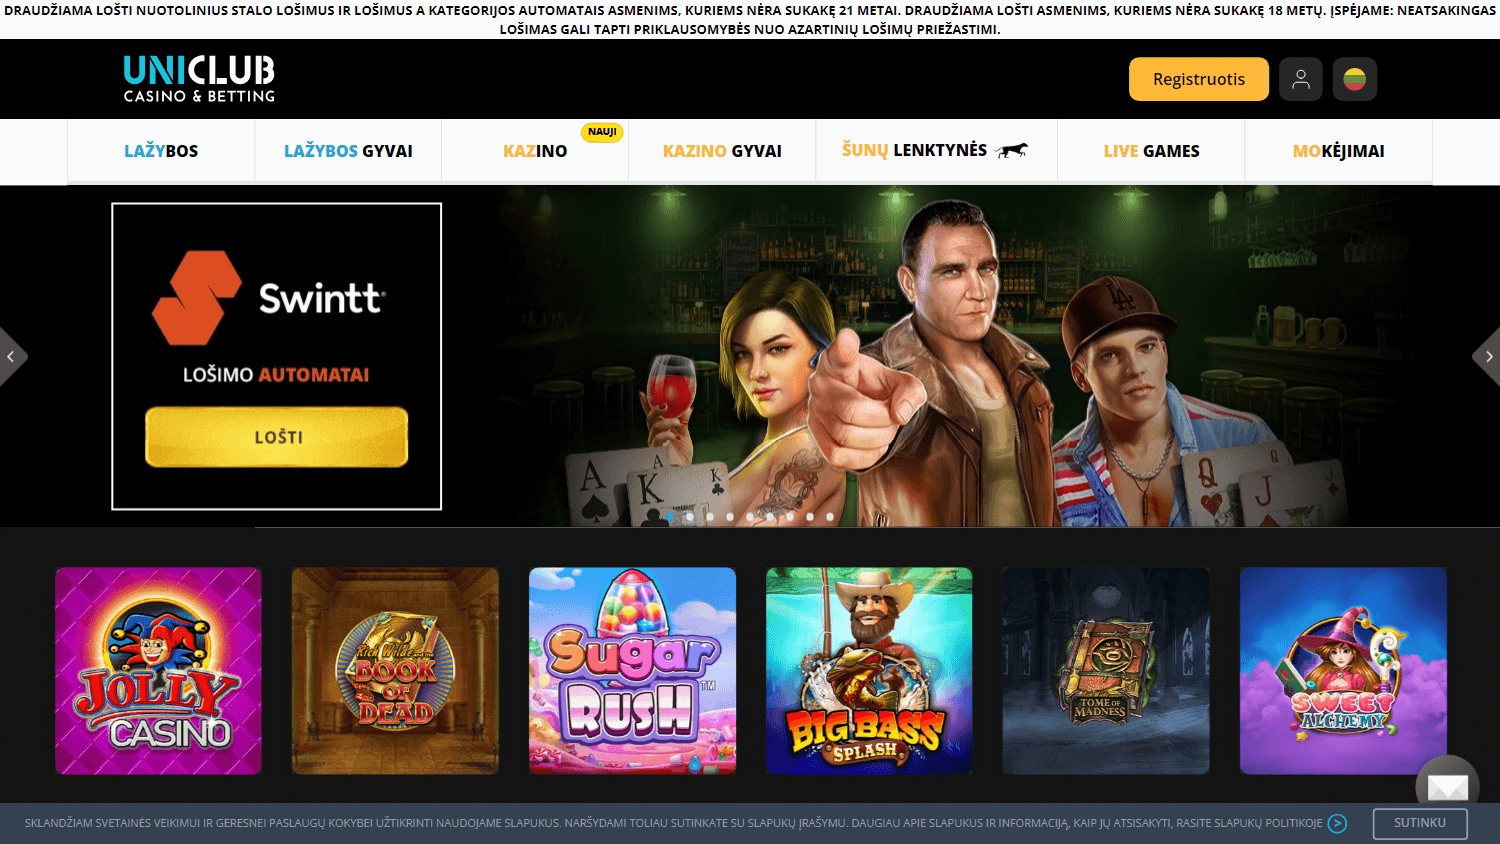 uniclub_casino_homepage_desktop